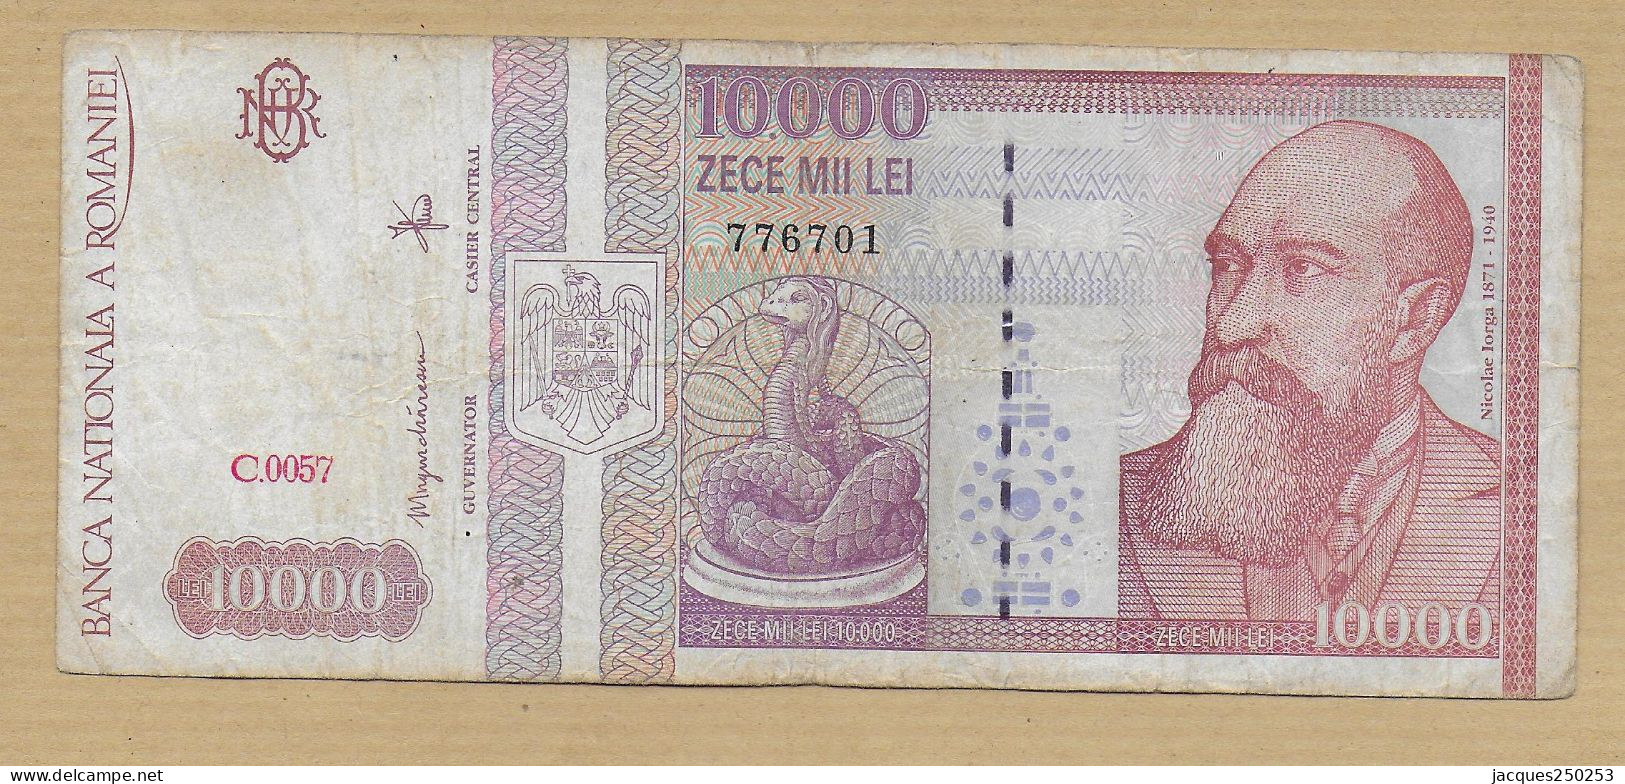 10000 LEI 1994 - Romania